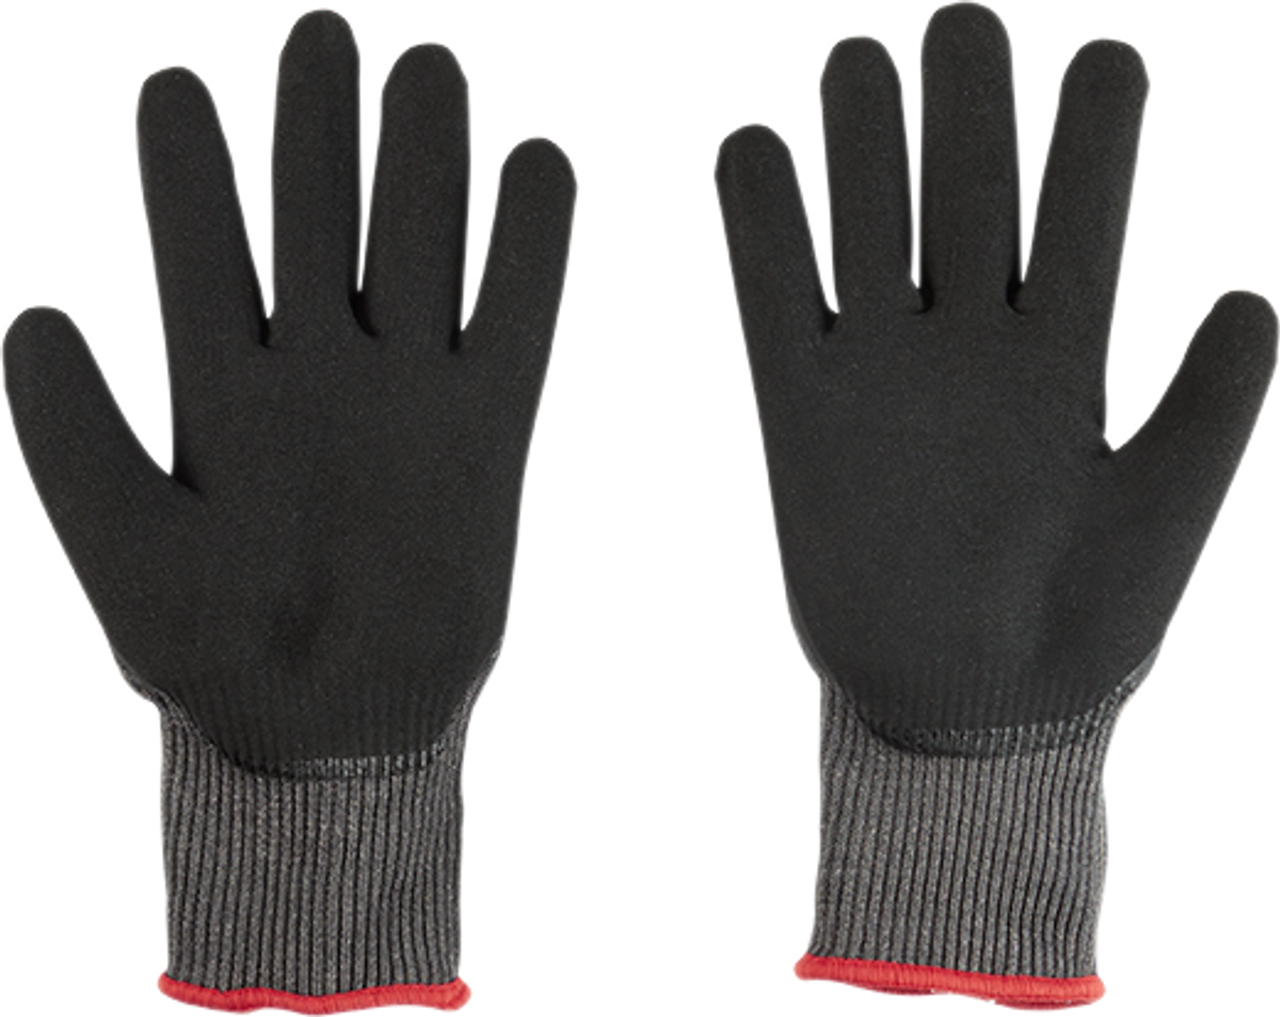 Milwaukee 48-22-89 Cut Level 5 Nitrile Dipped Gloves Each